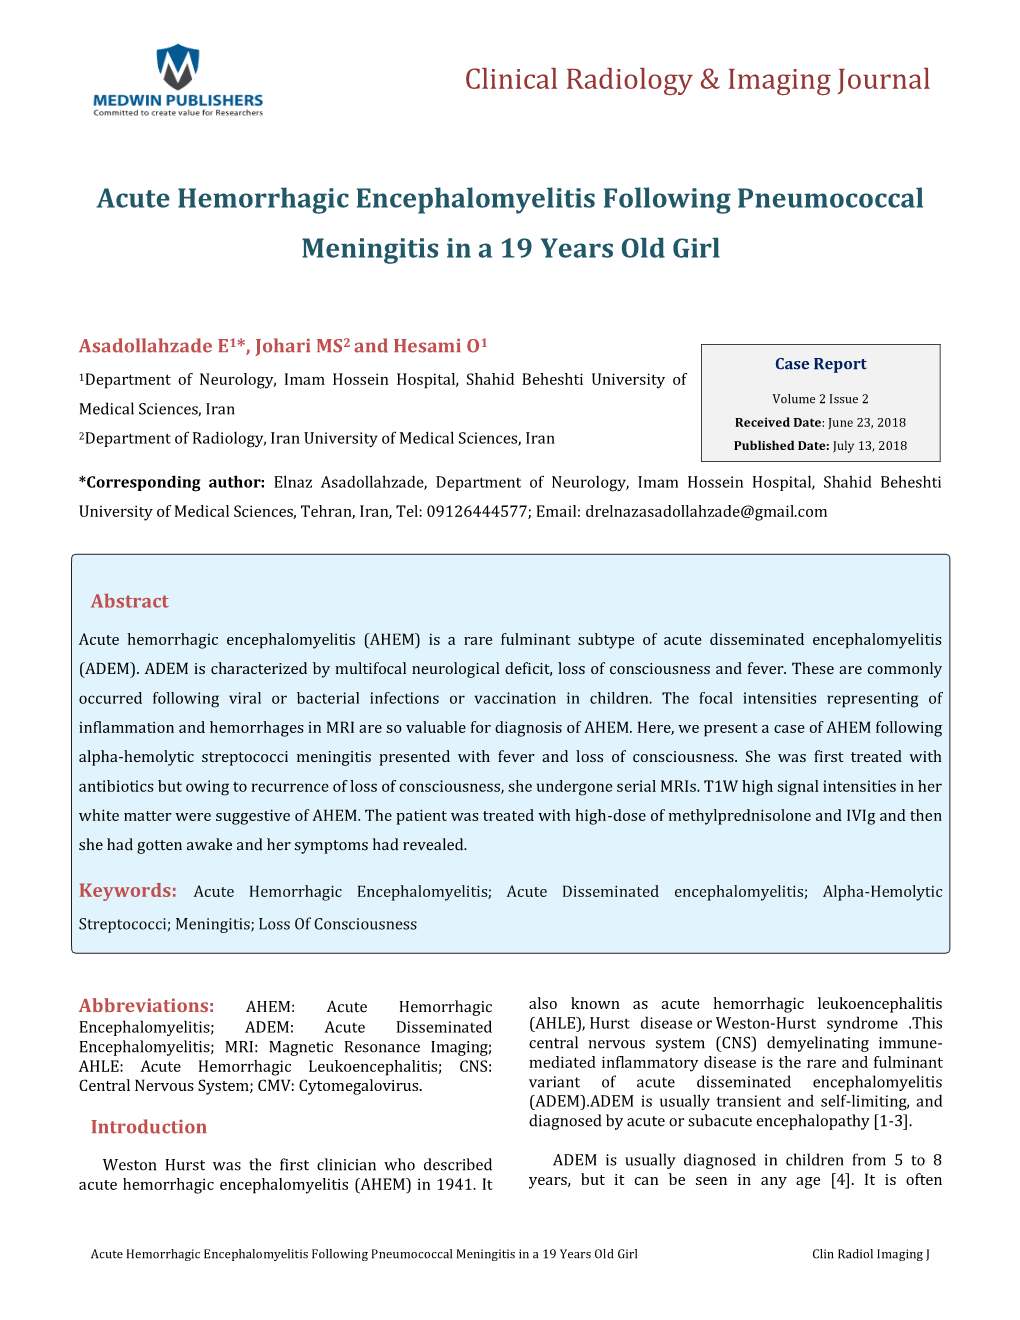 Acute Hemorrhagic Encephalomyelitis Following Pneumococcal Meningitis in a 19 Years Old Girl. Clin Radiol Imaging J 2018, 2(2)